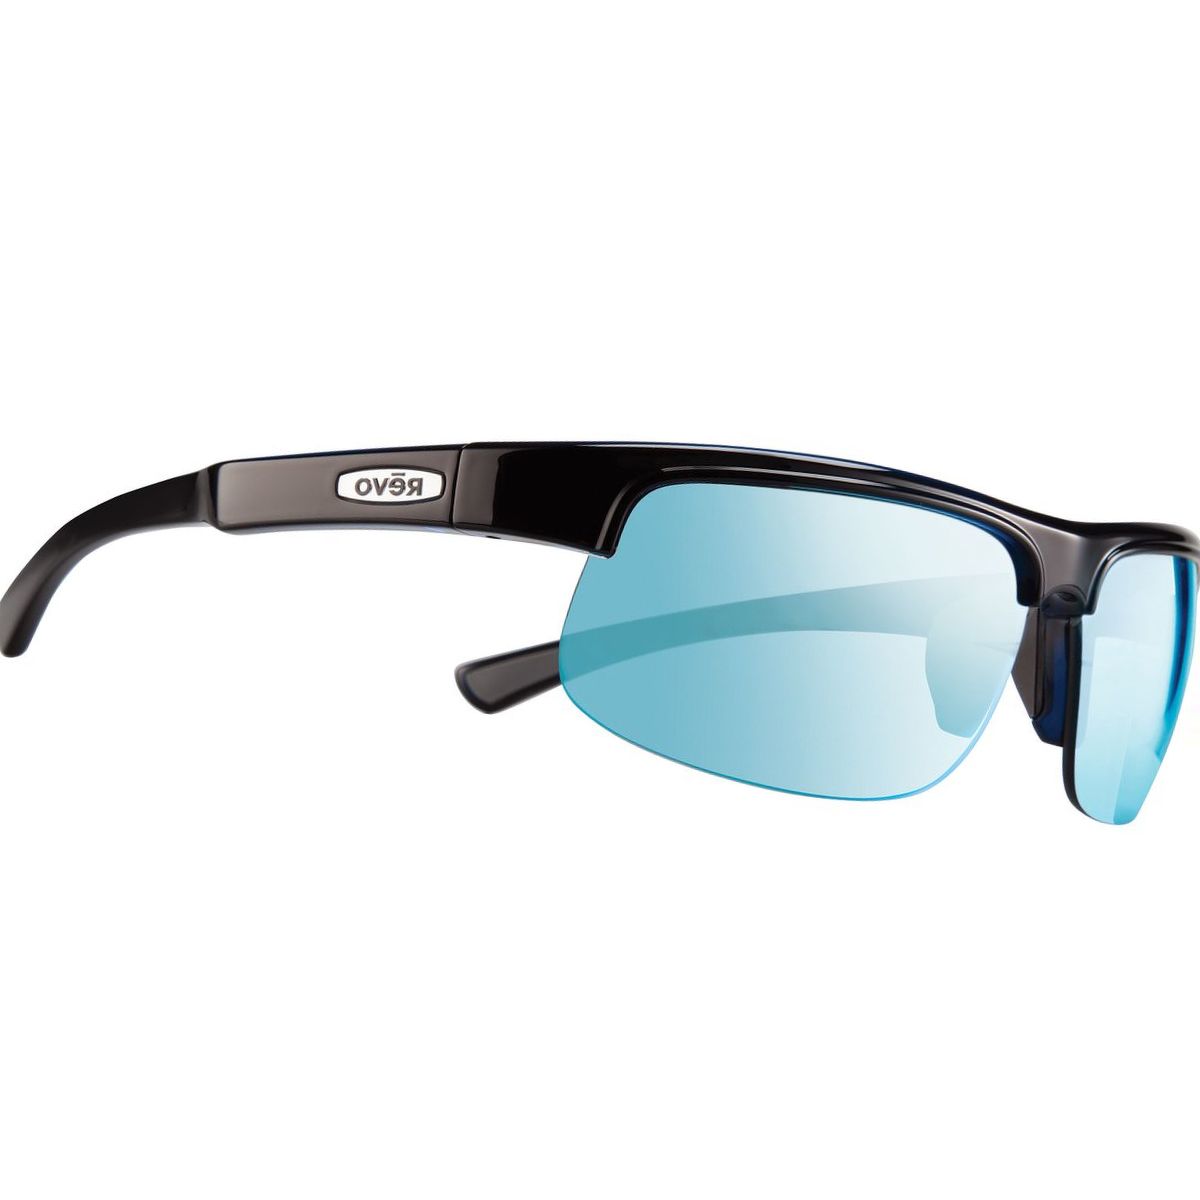 Revo Cusp C Polarized Sunglasses - Men's